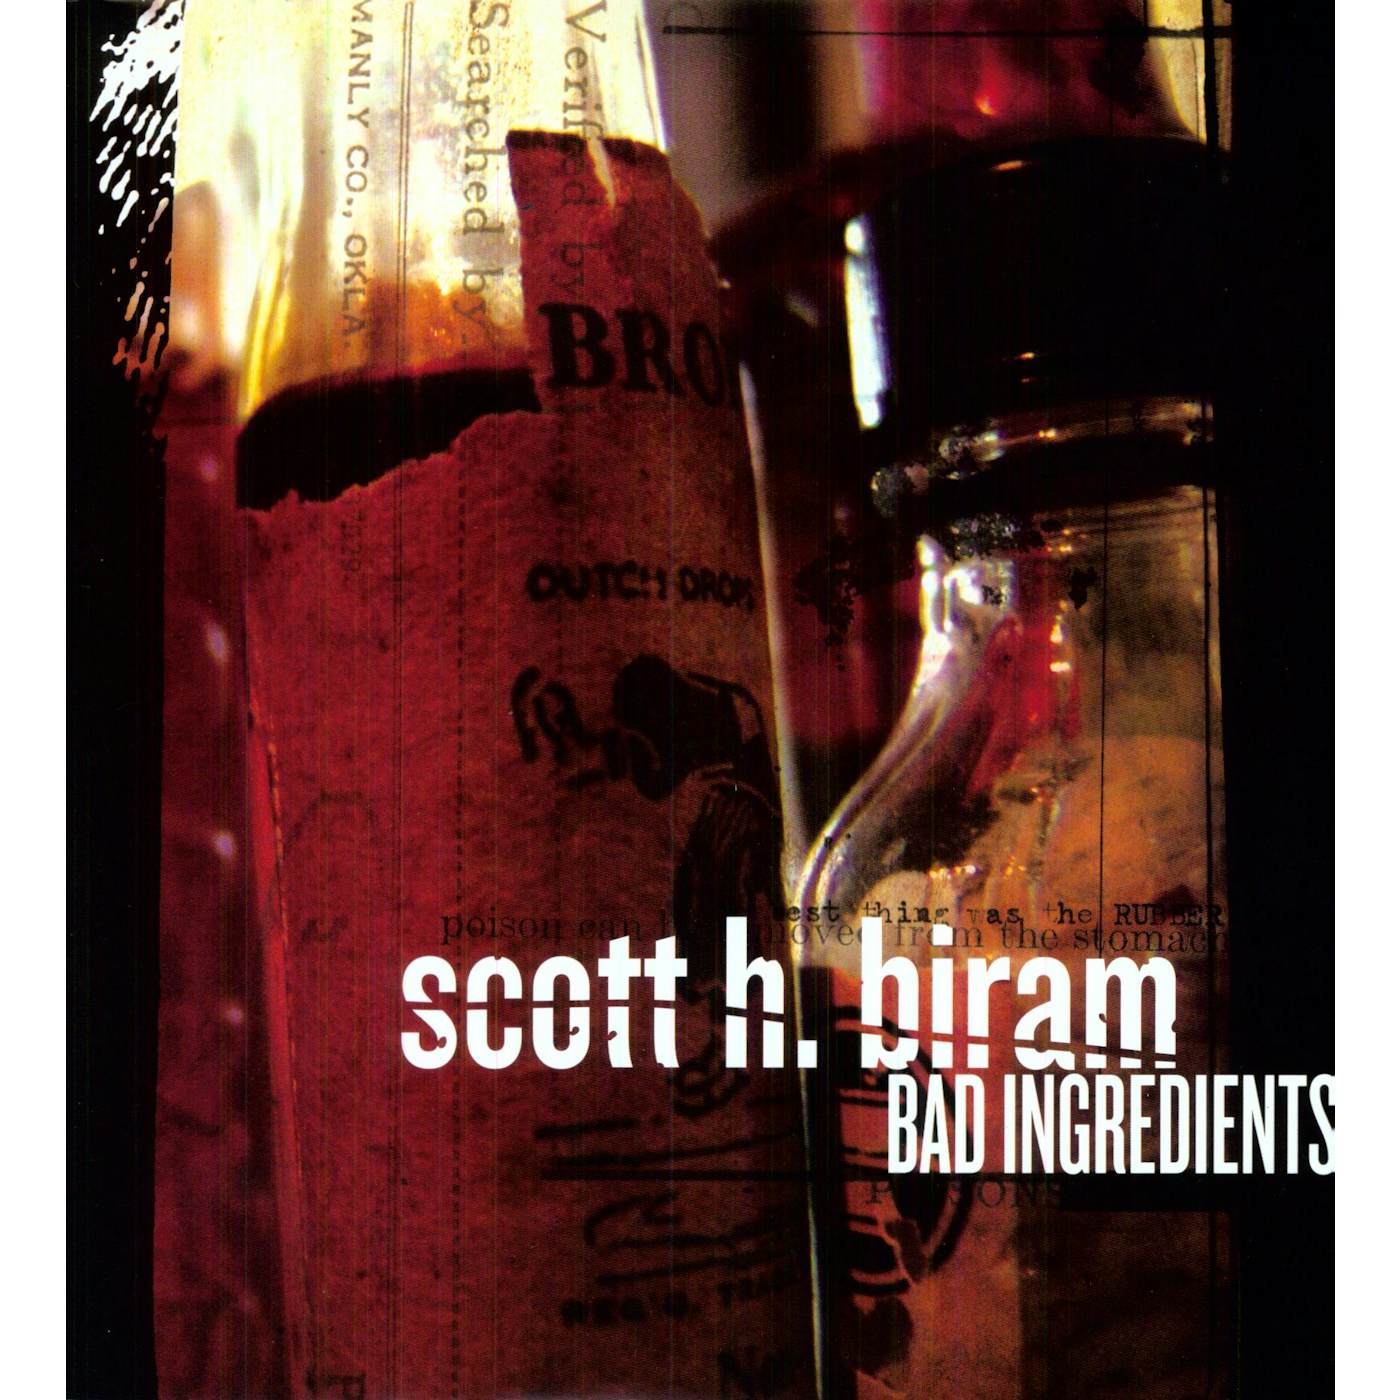 Scott H. Biram BAD INGREDIENTS Vinyl Record